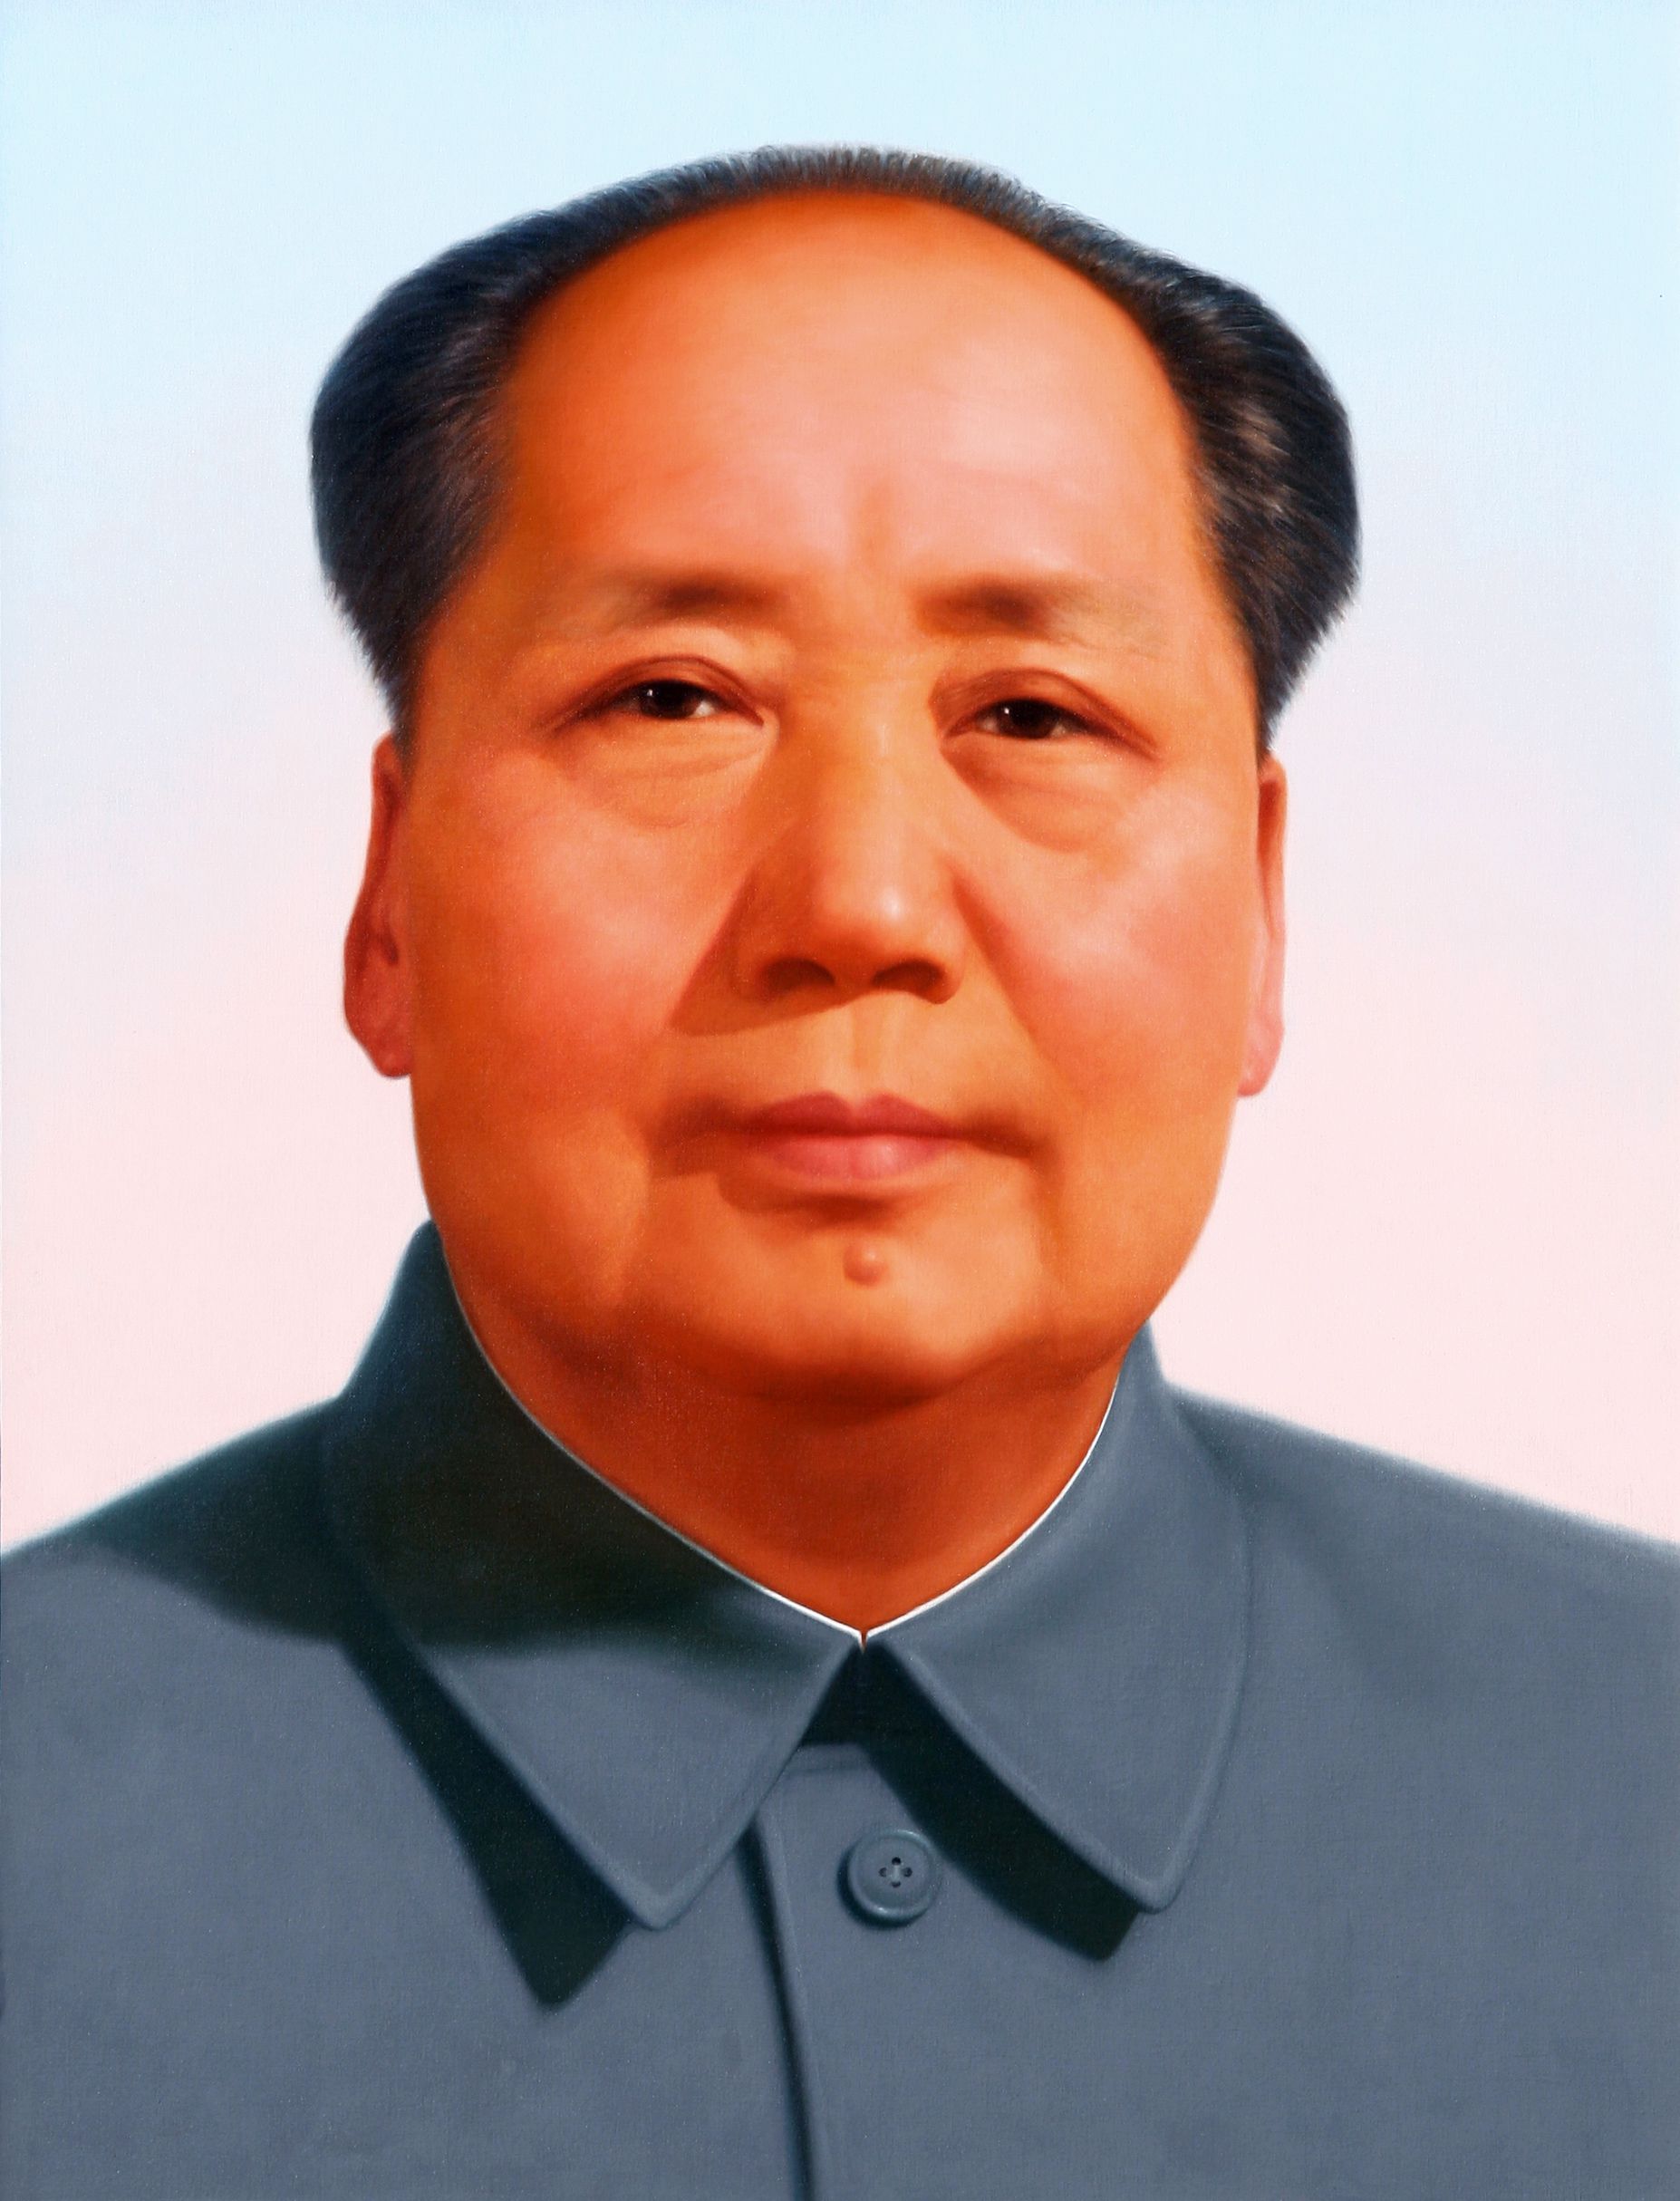 Mao Zedong Wallpapers - Wallpaper Cave